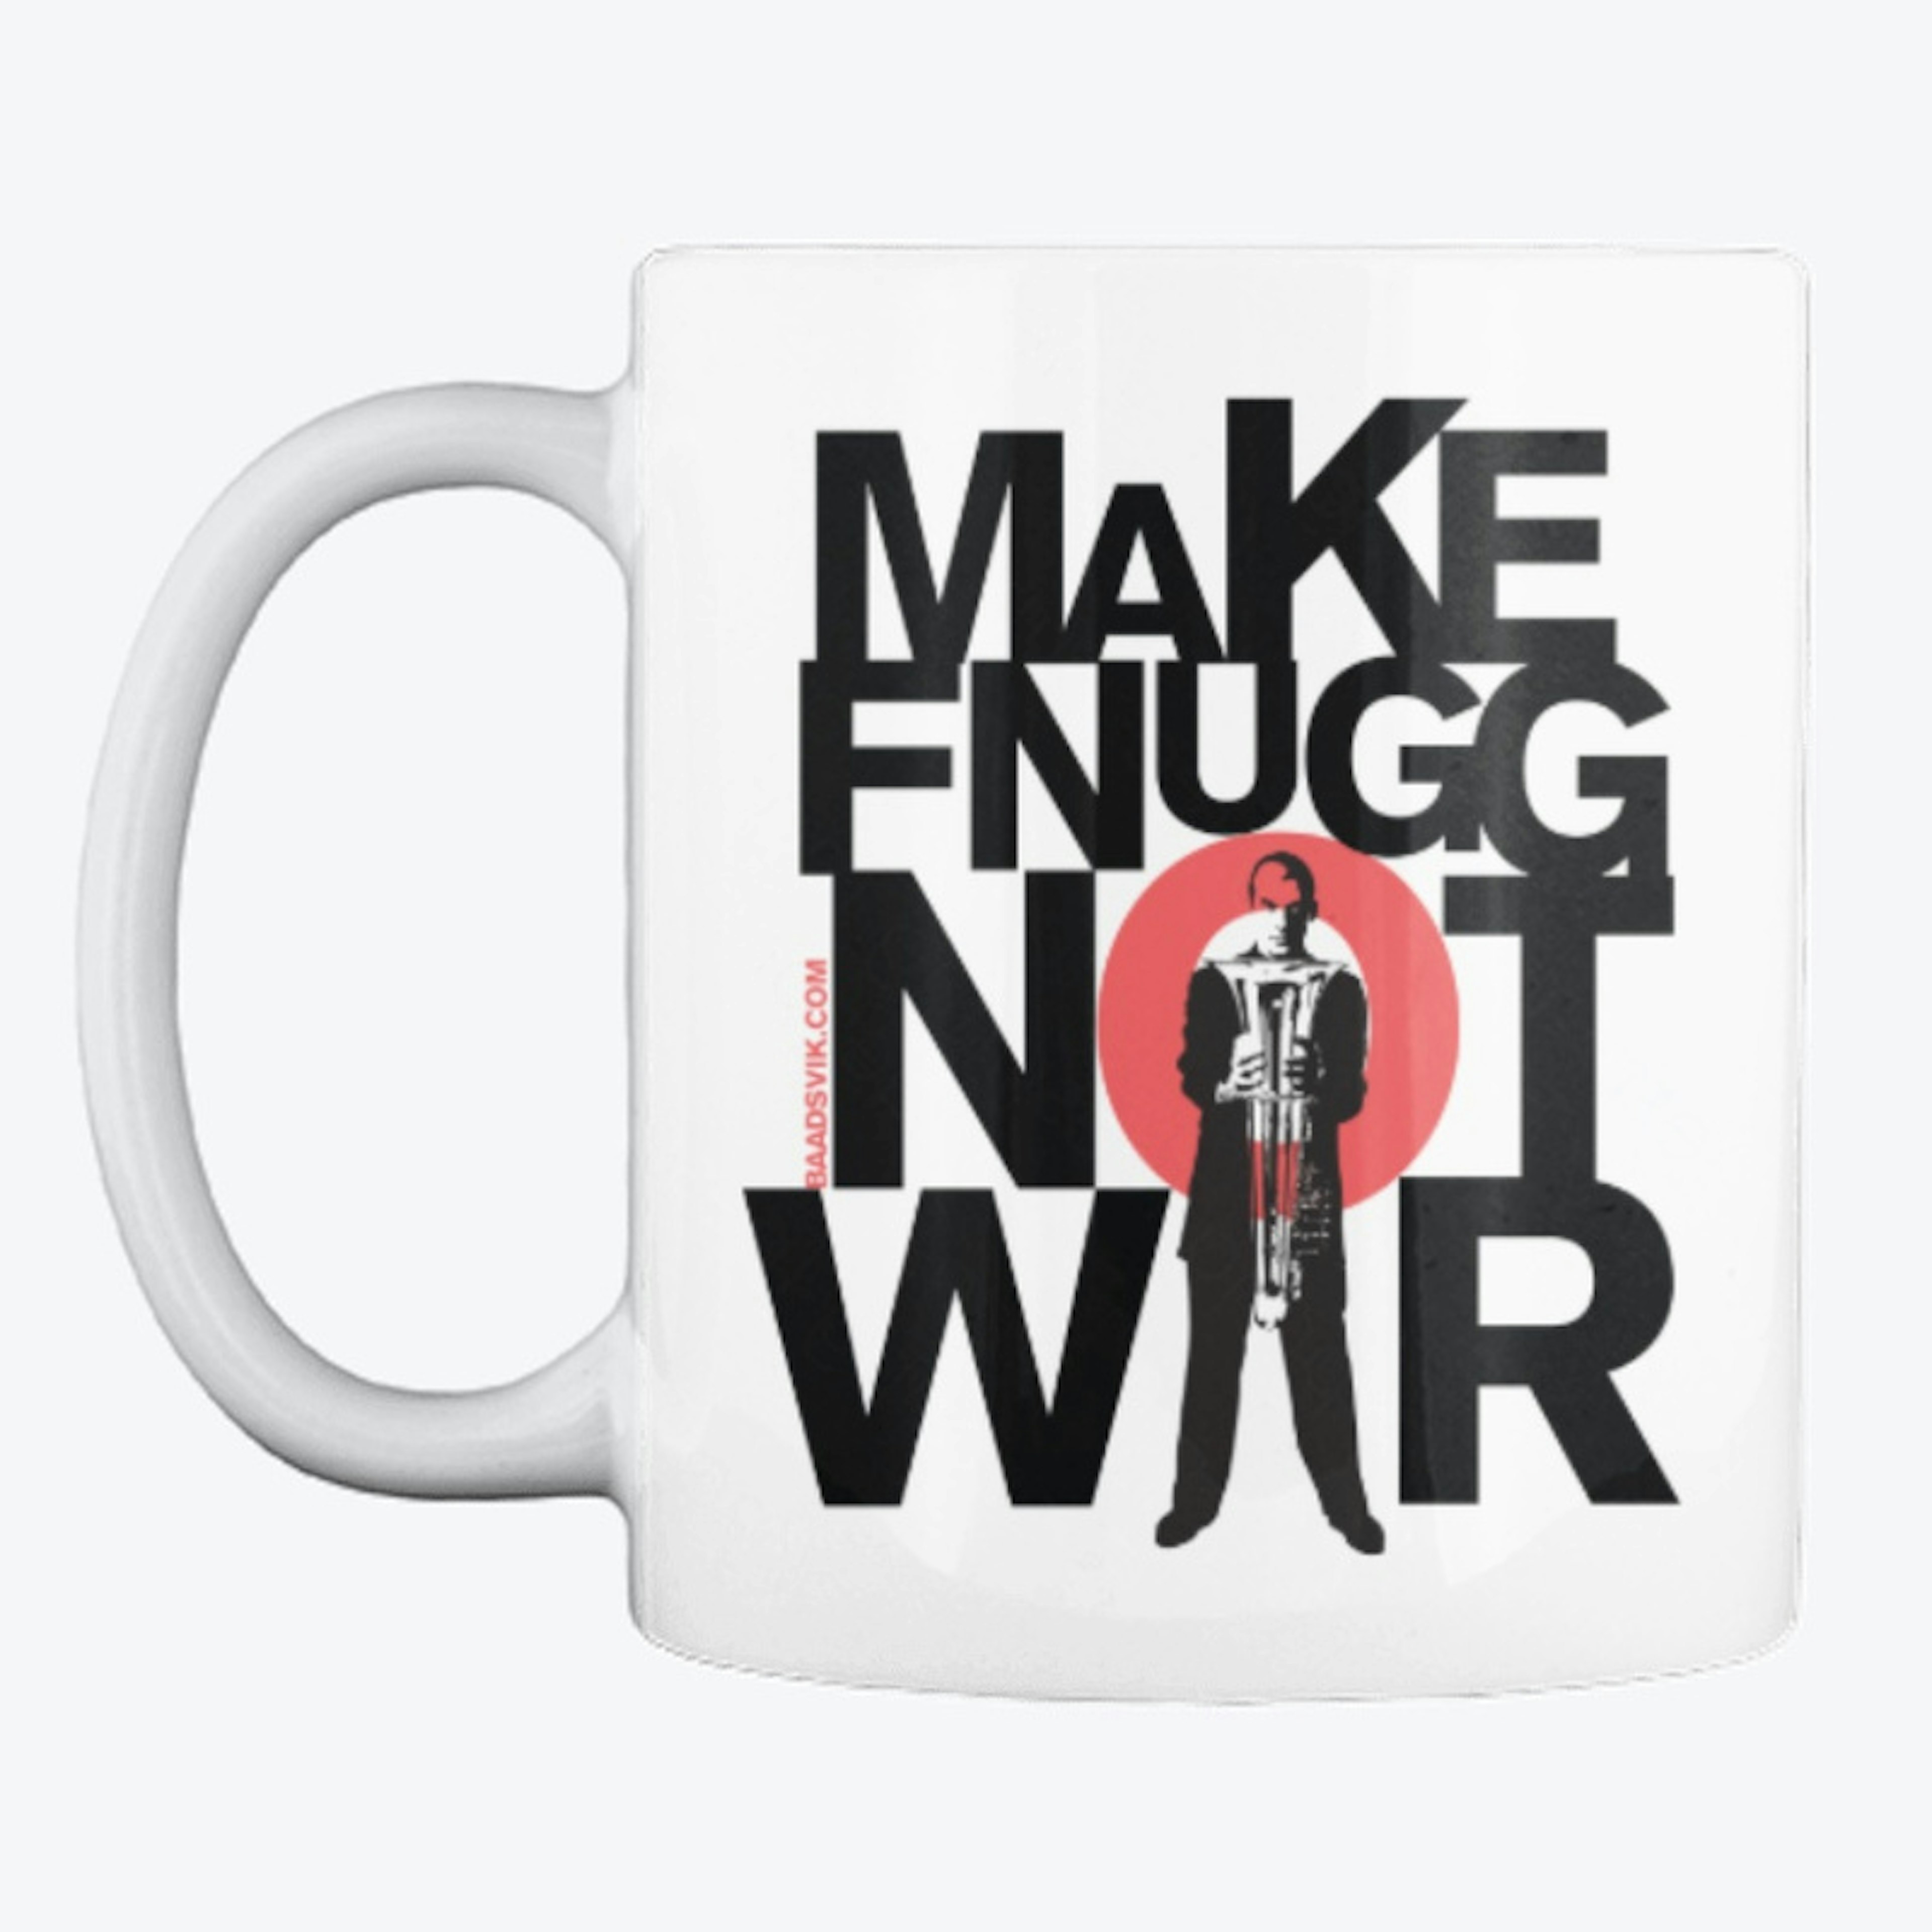 Make Fnugg Not War accessories